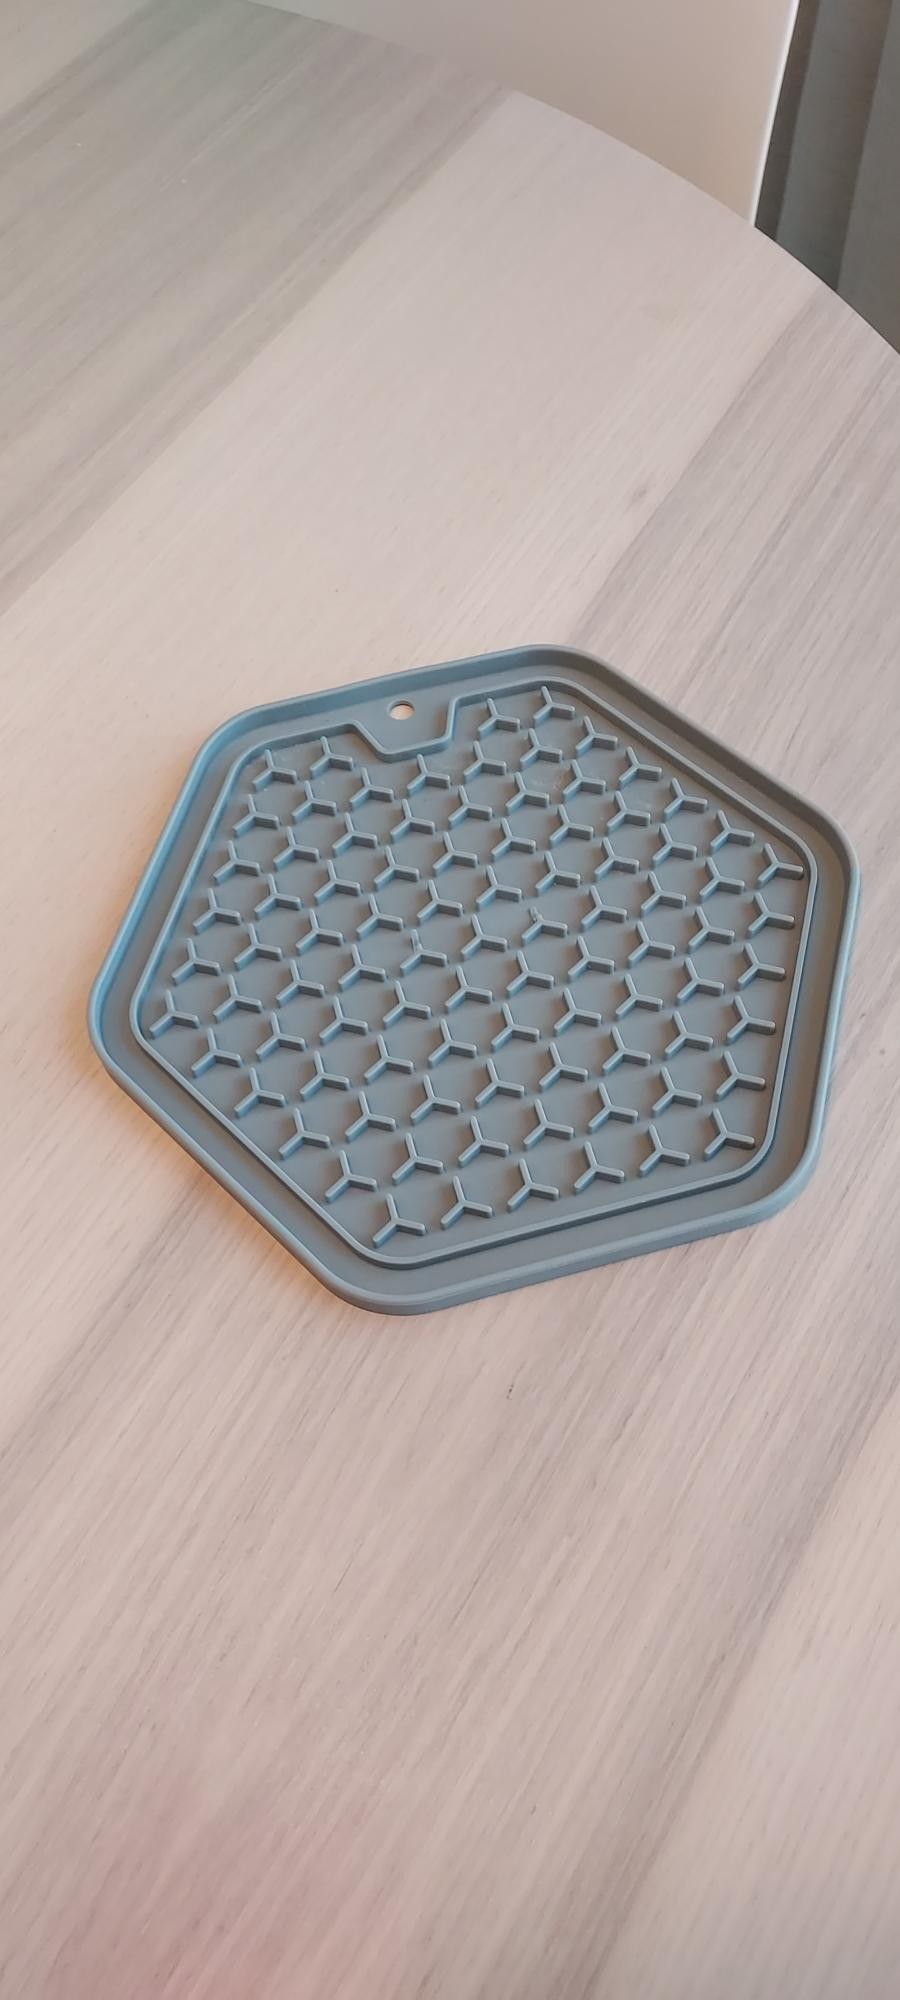 Nuolumatto Basic Hexagon 22cm